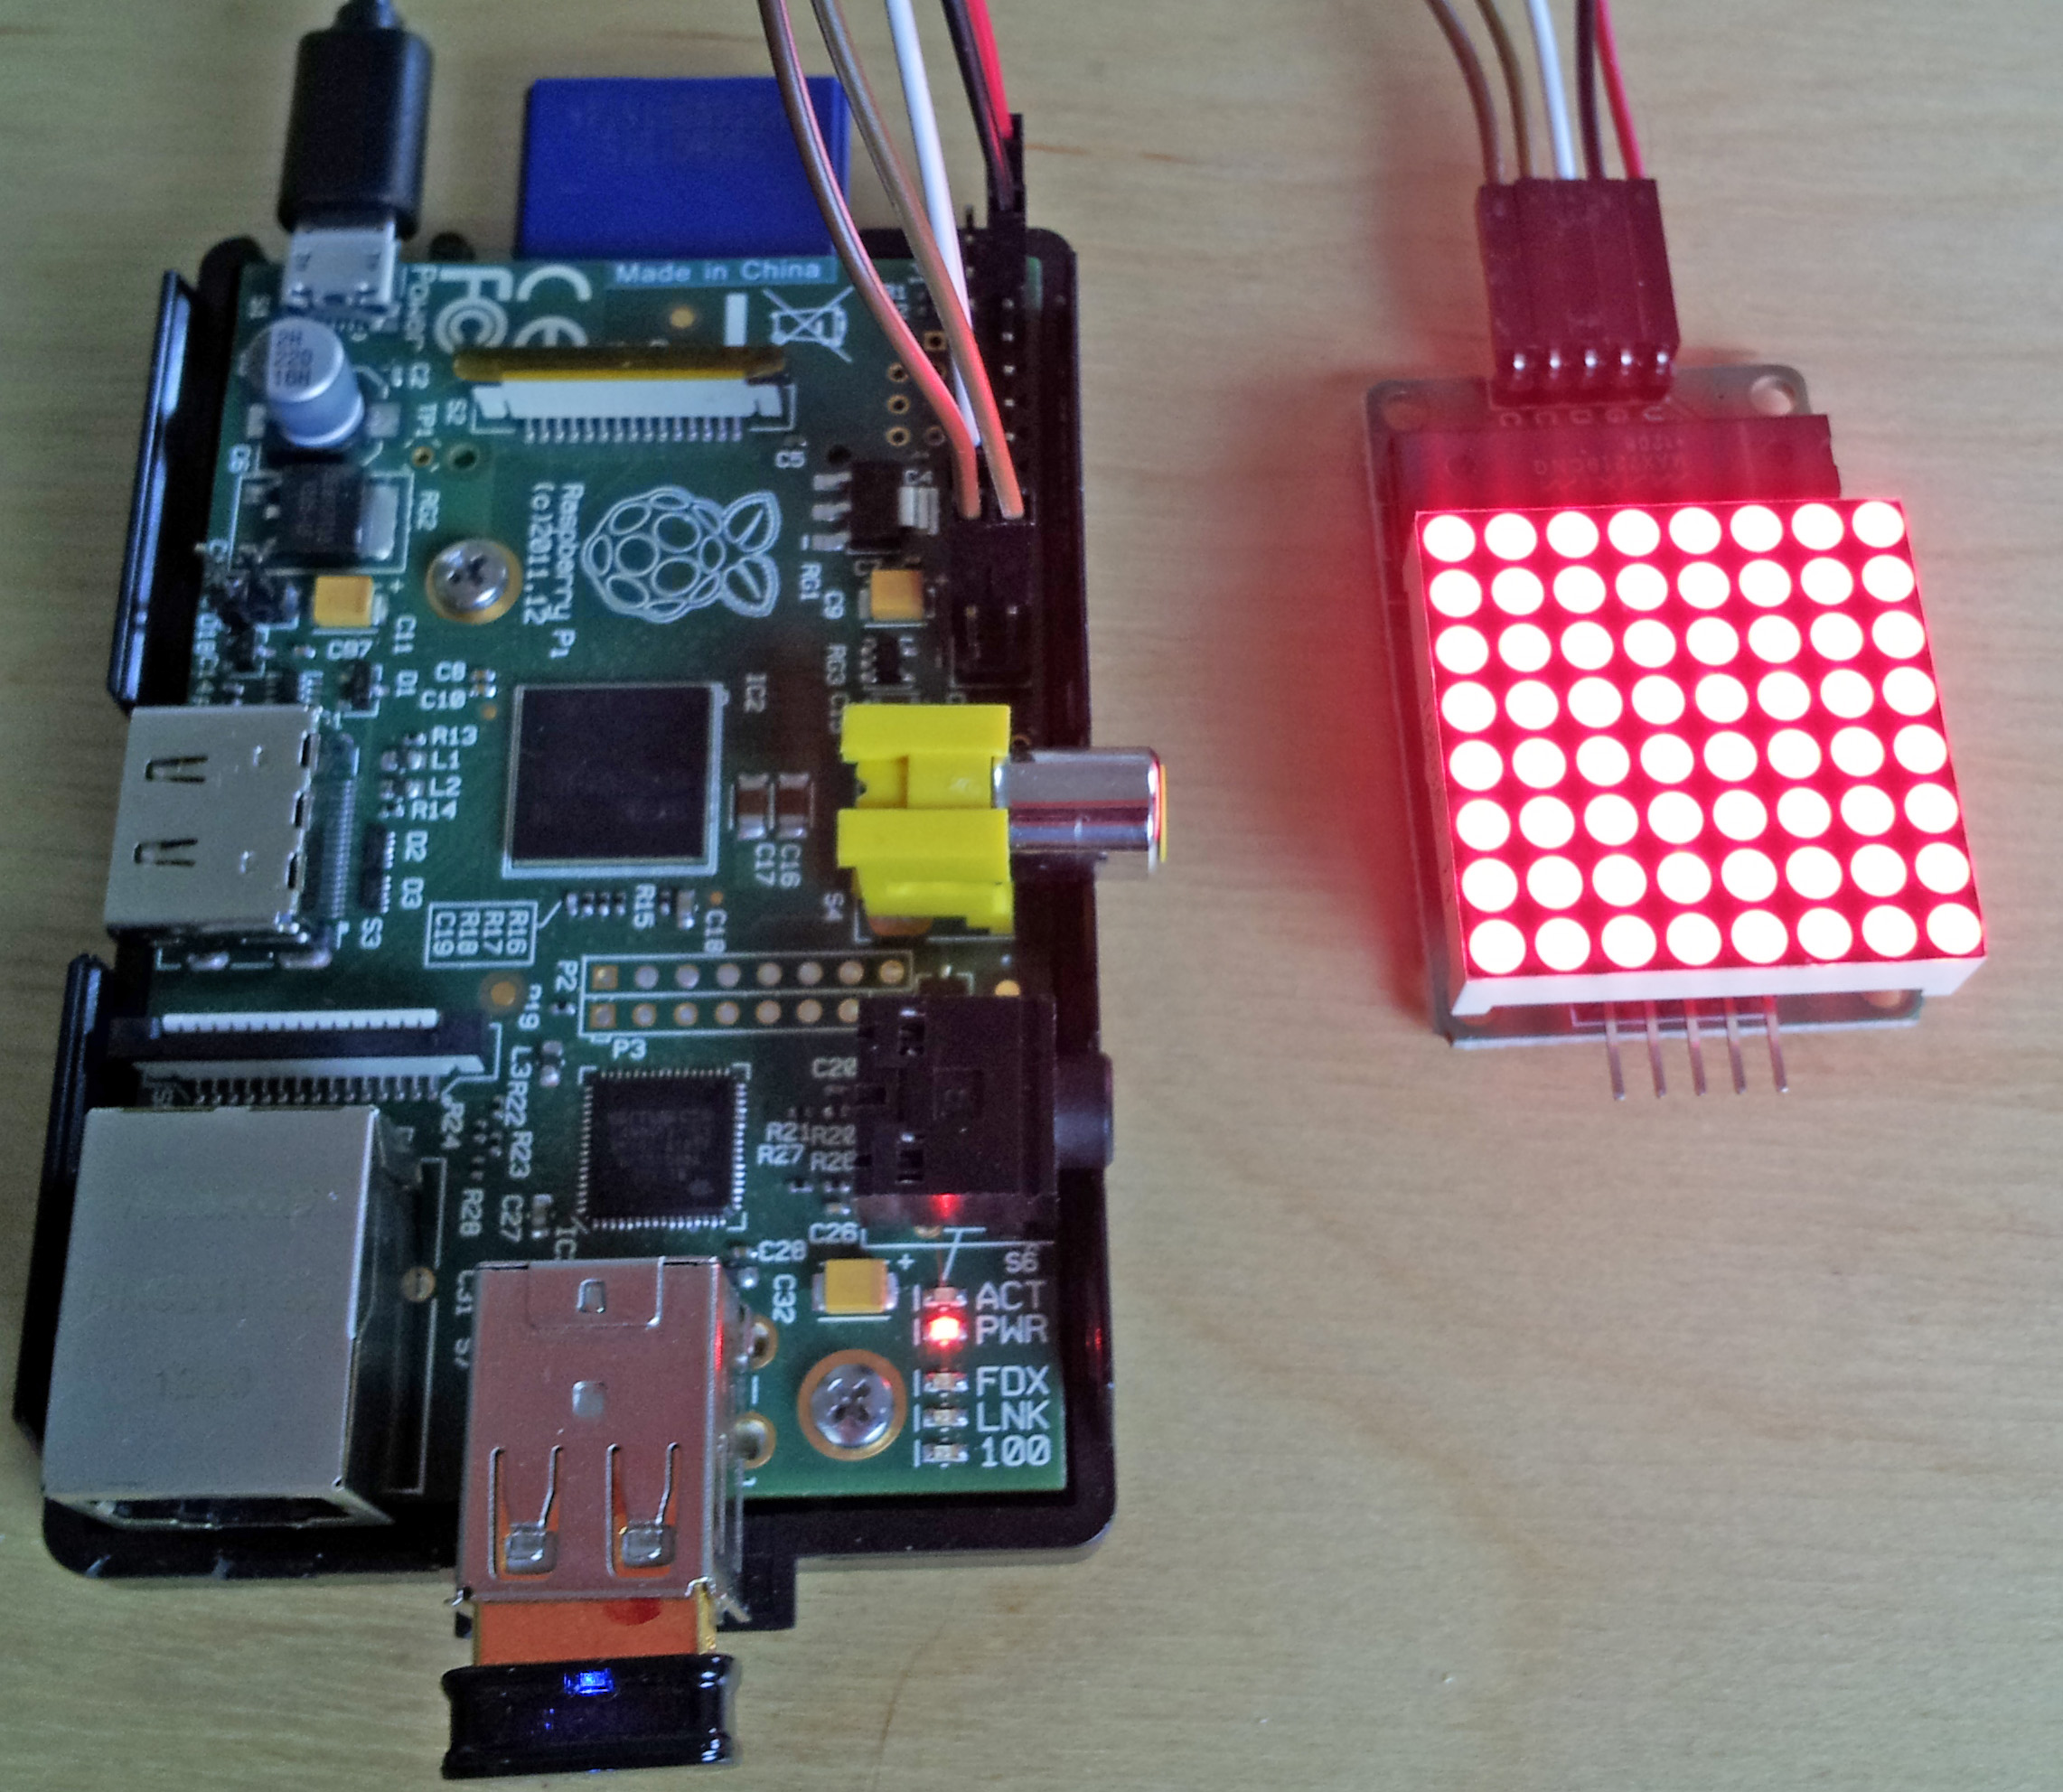 8 x 8 LED array driven by max7219 the Pi via python –